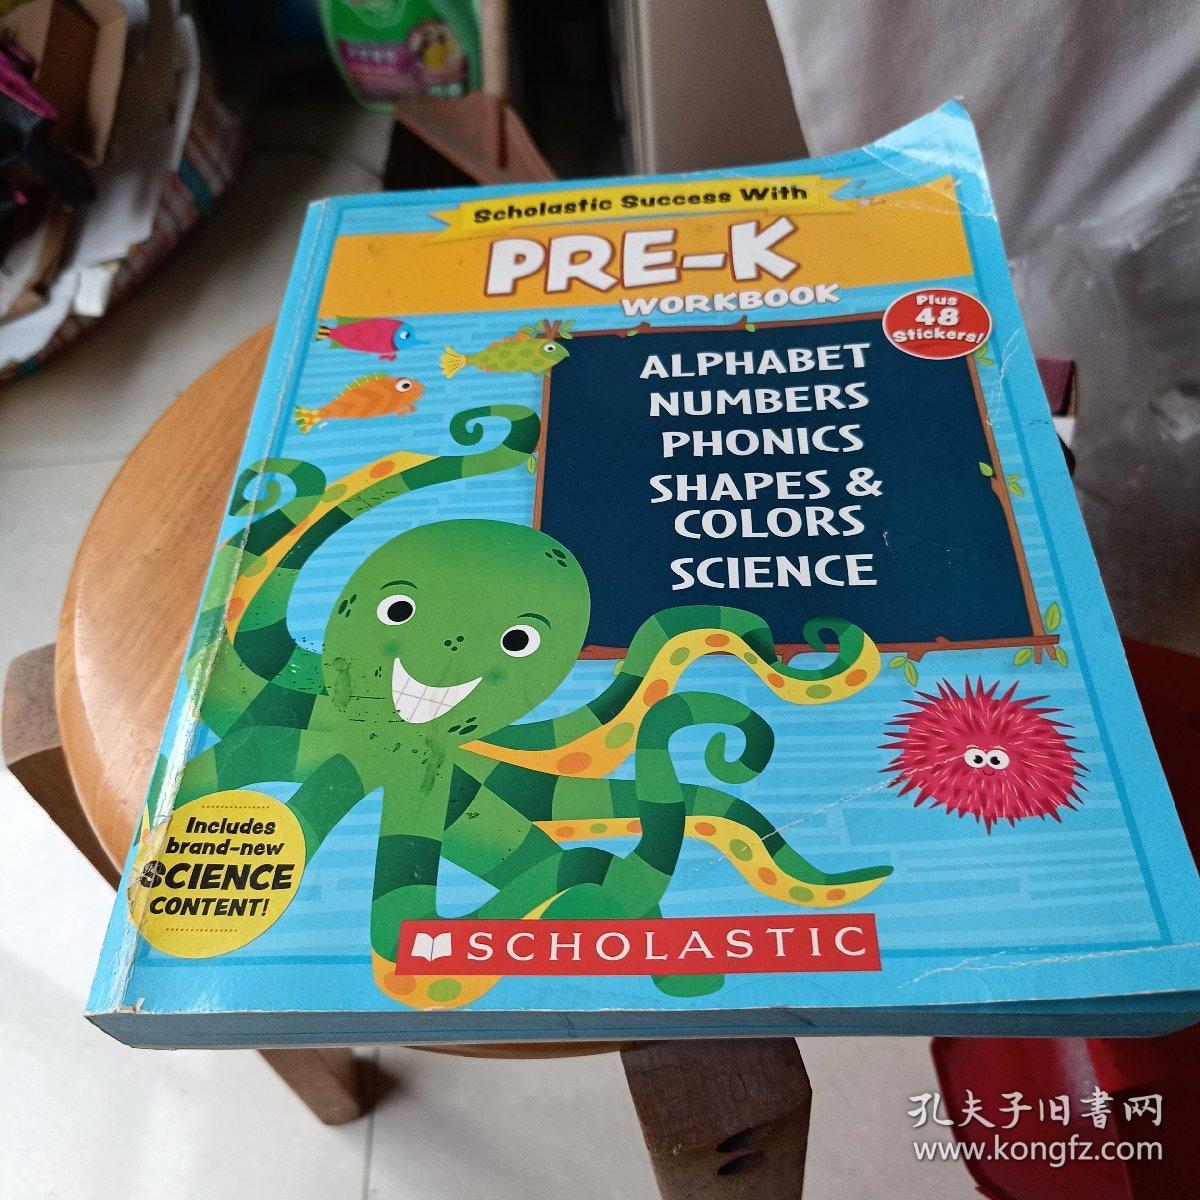 scholastic success with PRE_K workbook